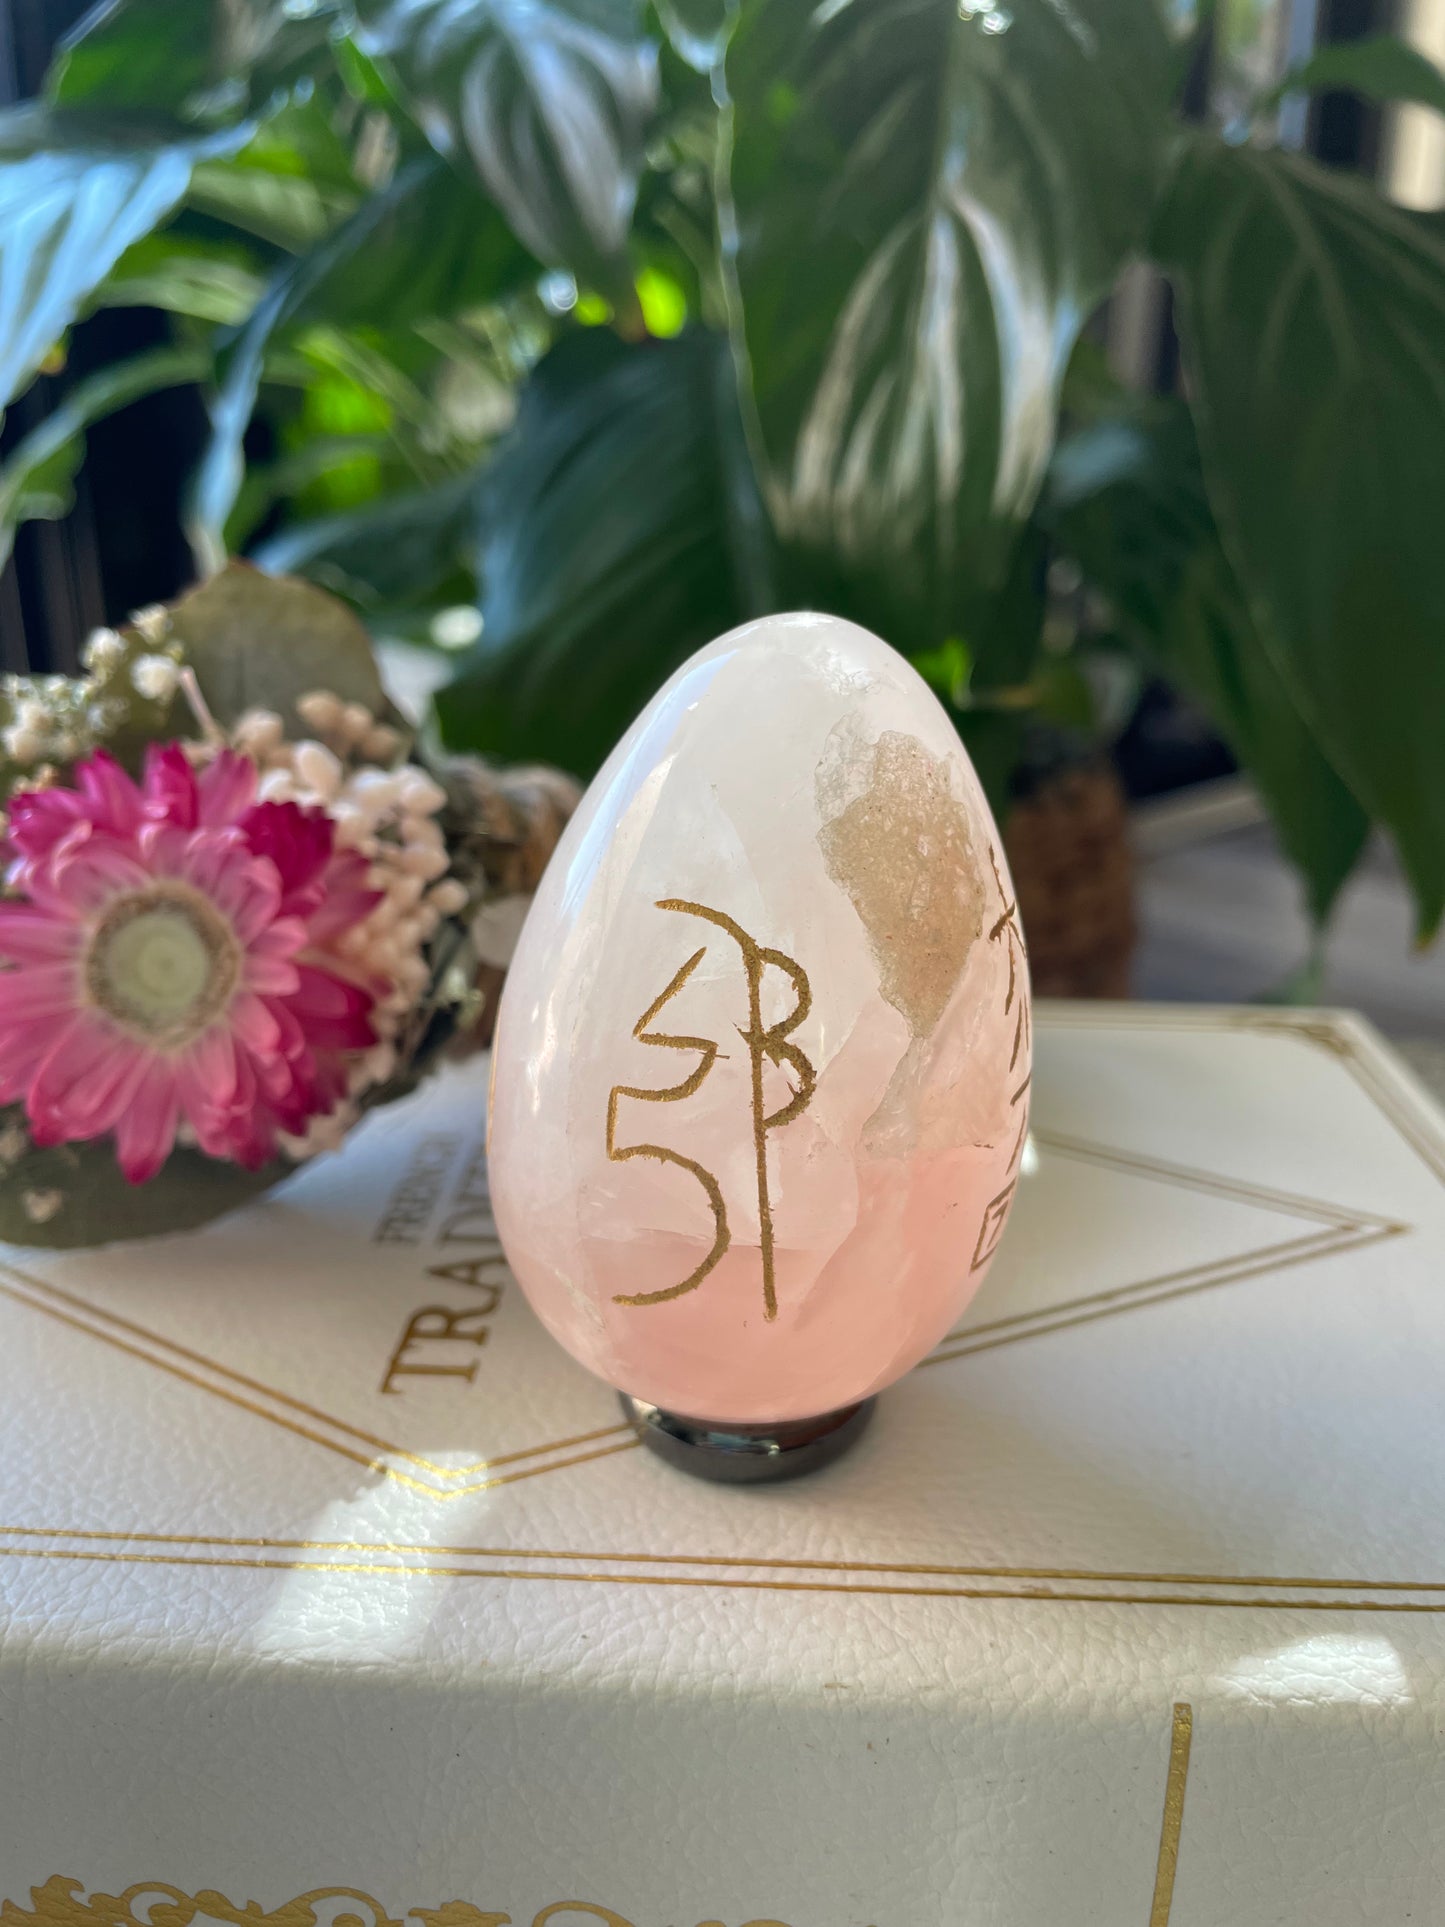 Rose Quartz Reiki Egg Includes Hematite Ring